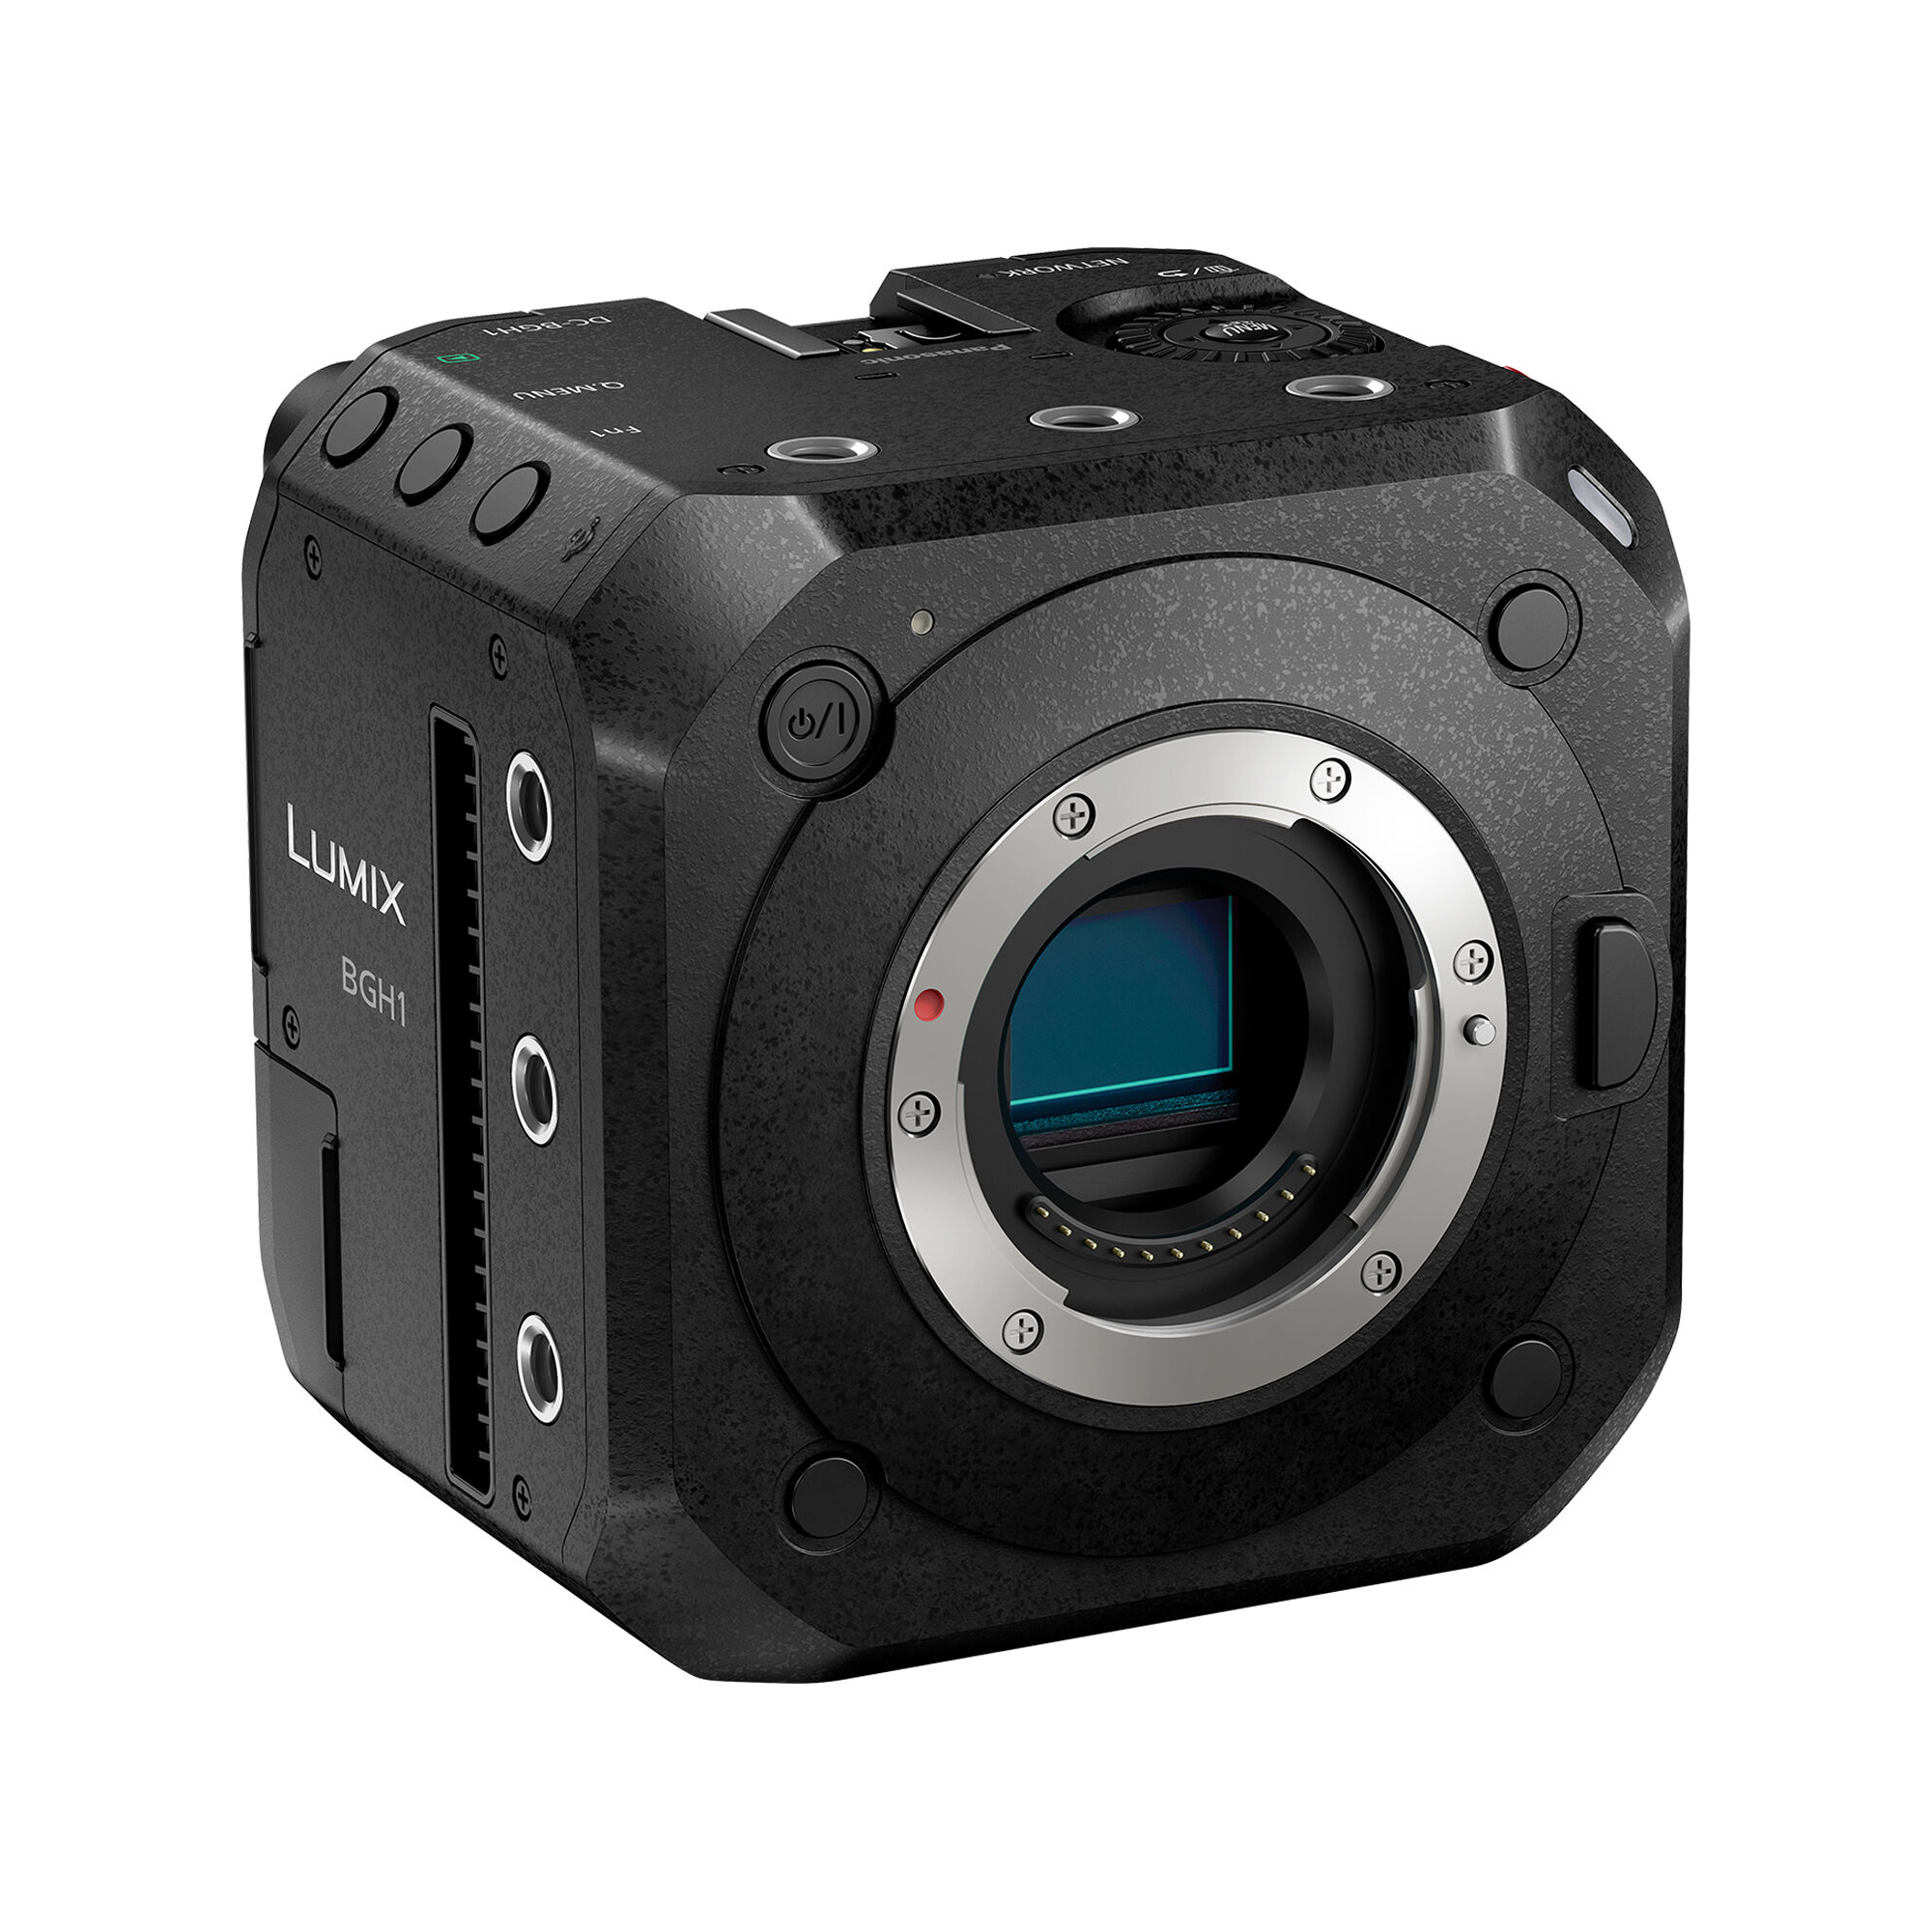 Panasonic Lumix BGH1 Cinema 4K Box Camera